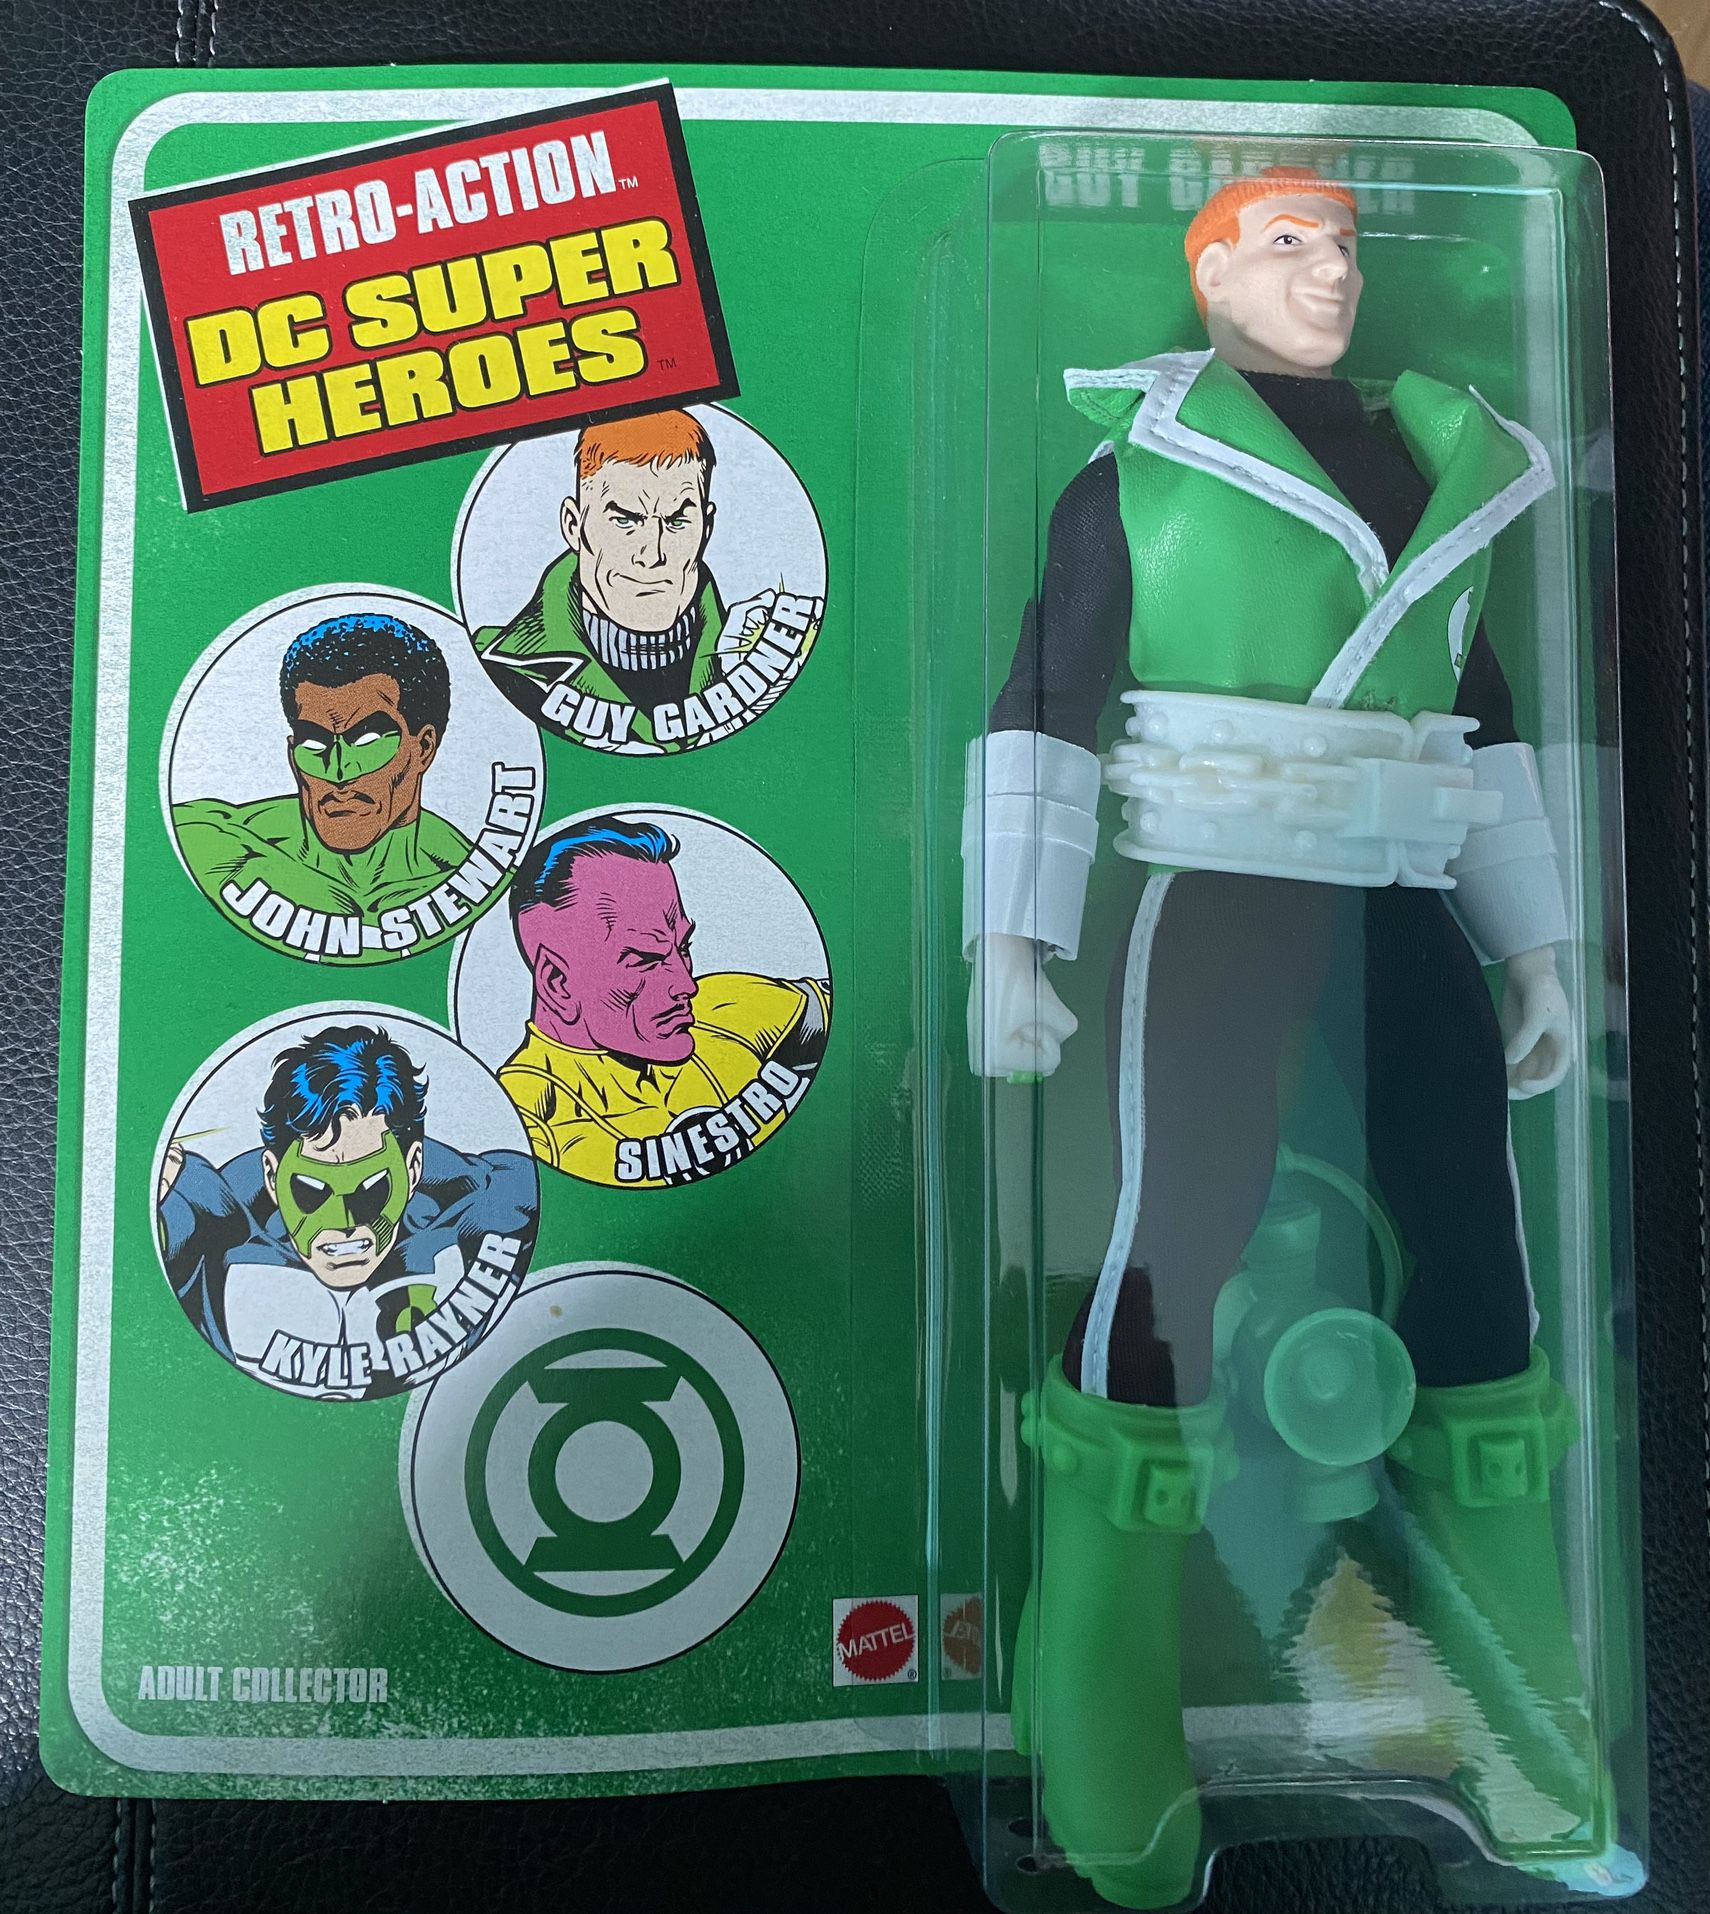 Guy Gardner 2010 Mattel Figure Retro-Action DC Super Heroes New W/Box